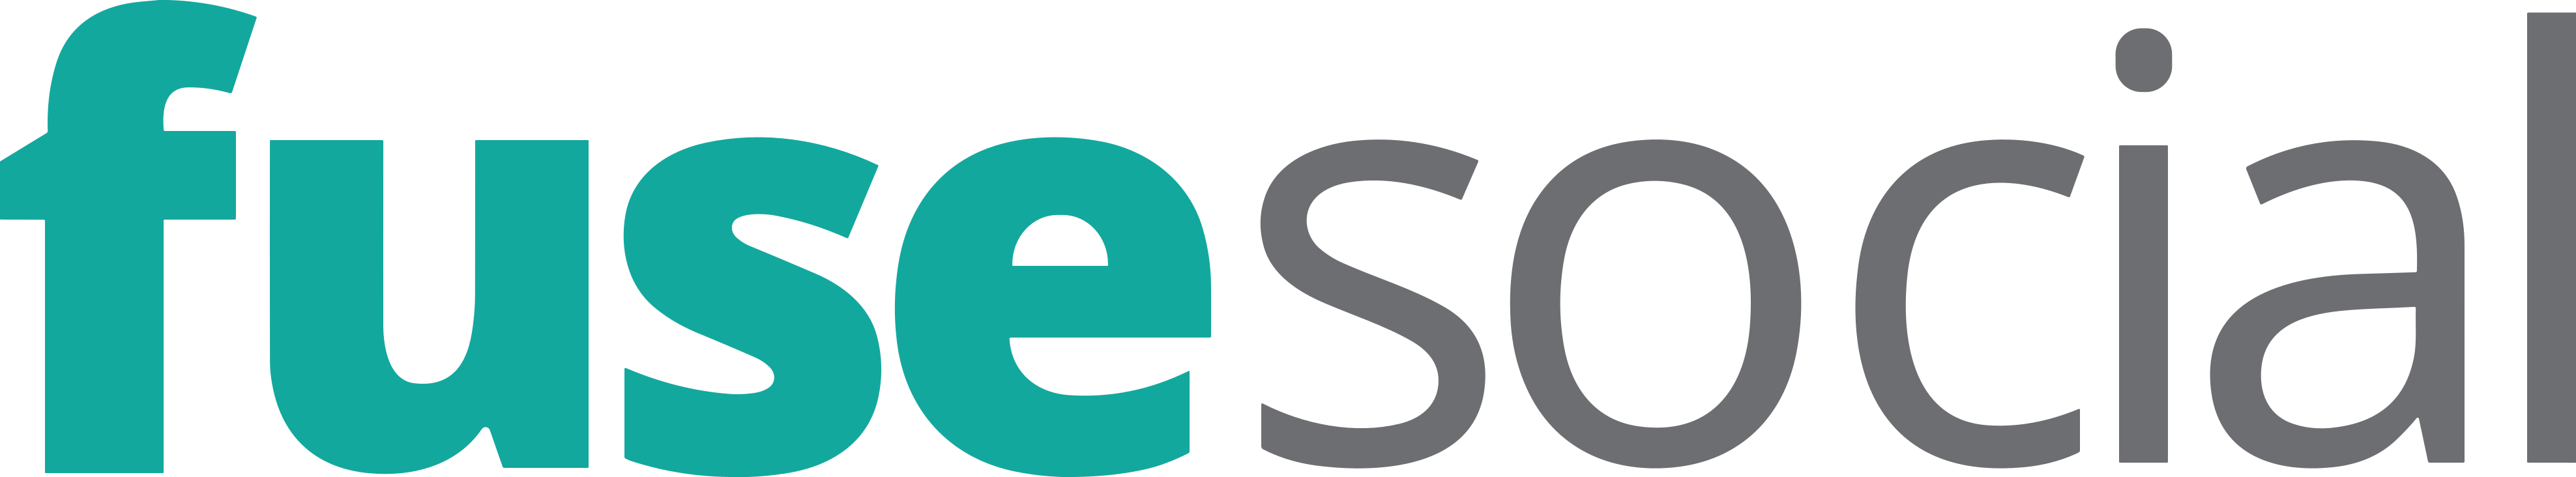 Logo for FuseSocial on a transparent background